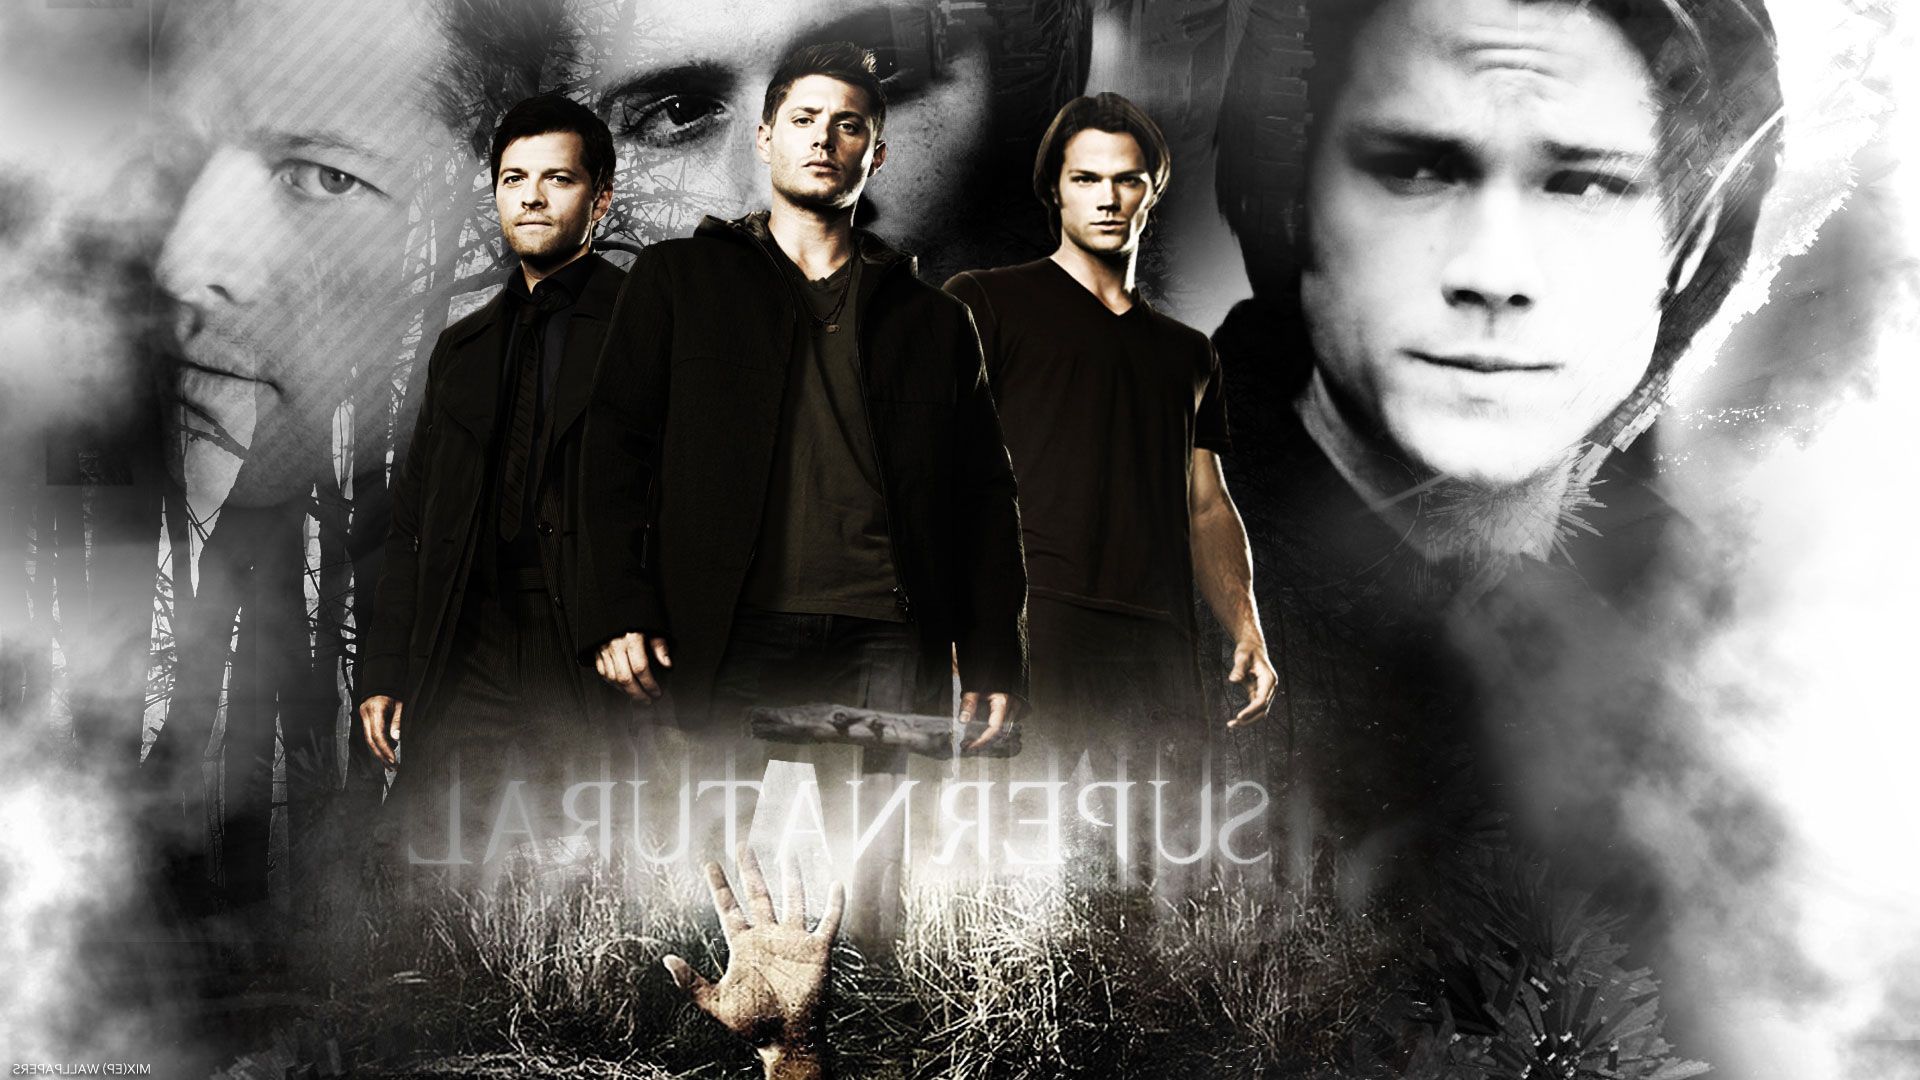 Supernatural TV Series Wallpaper Wallpaper. Supernatural picture, Supernatural wallpaper, Supernatural dean